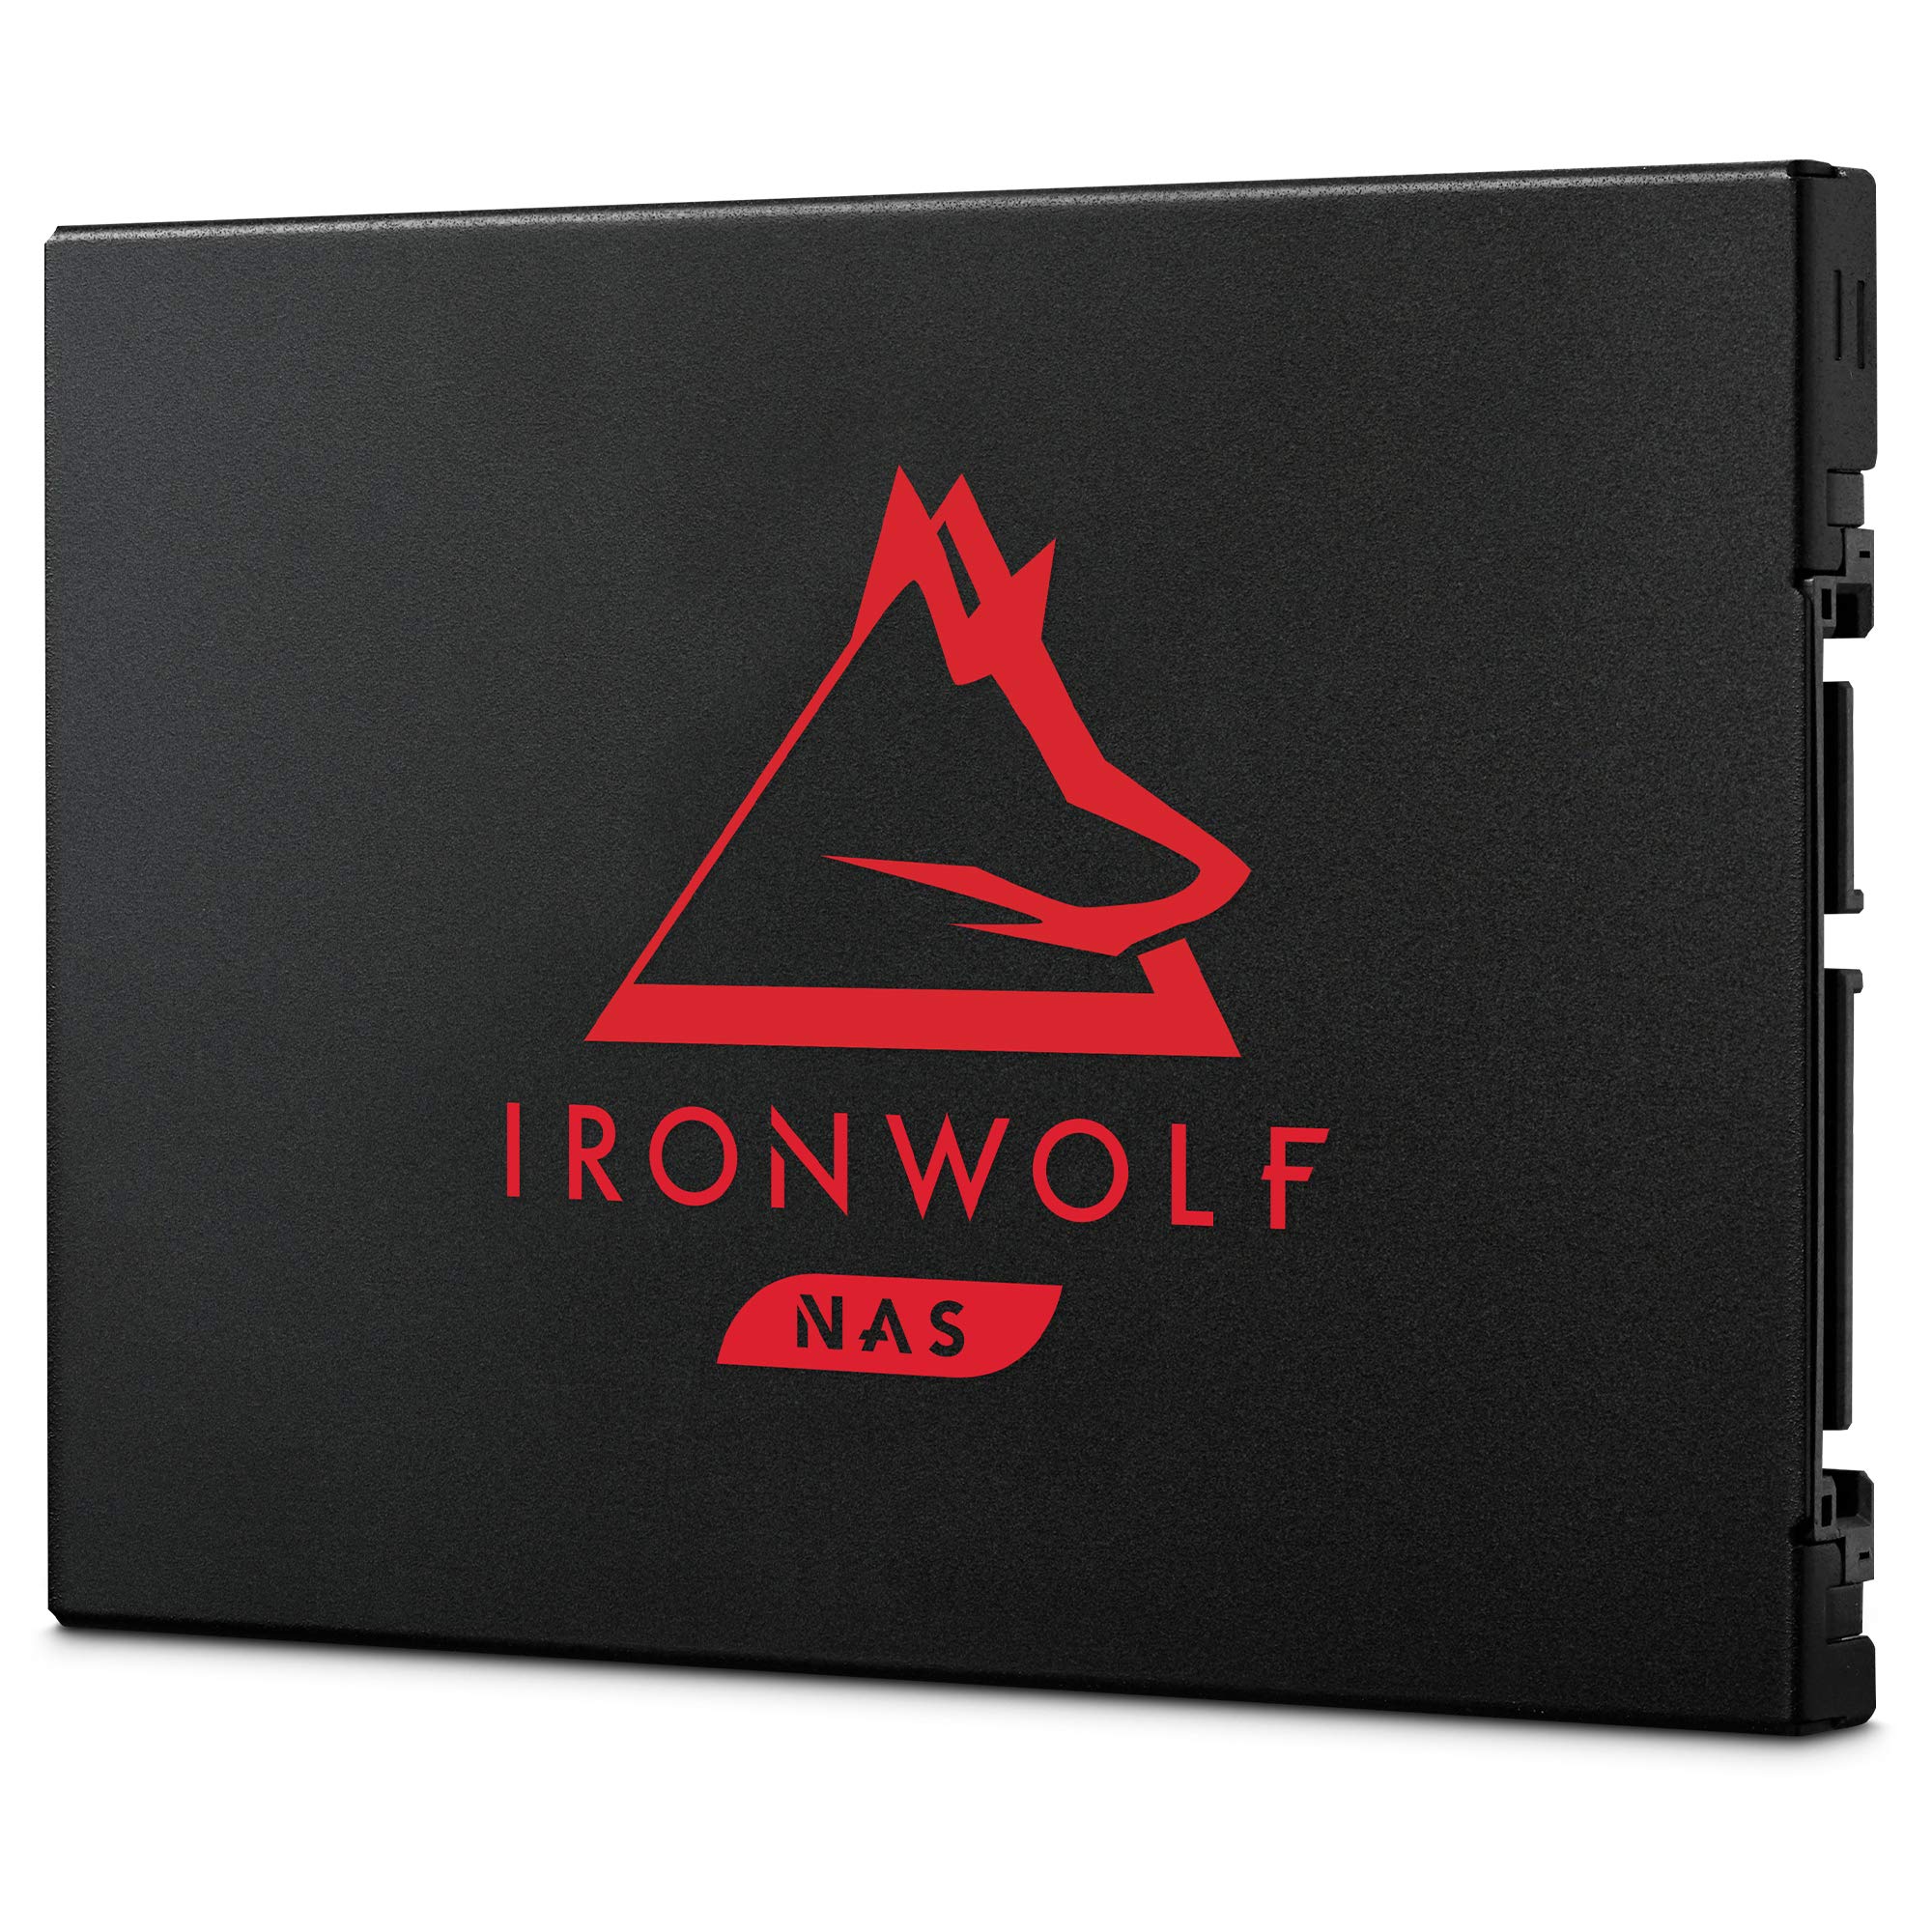 IRONWOLF 125 SSD 250GB RETAIL